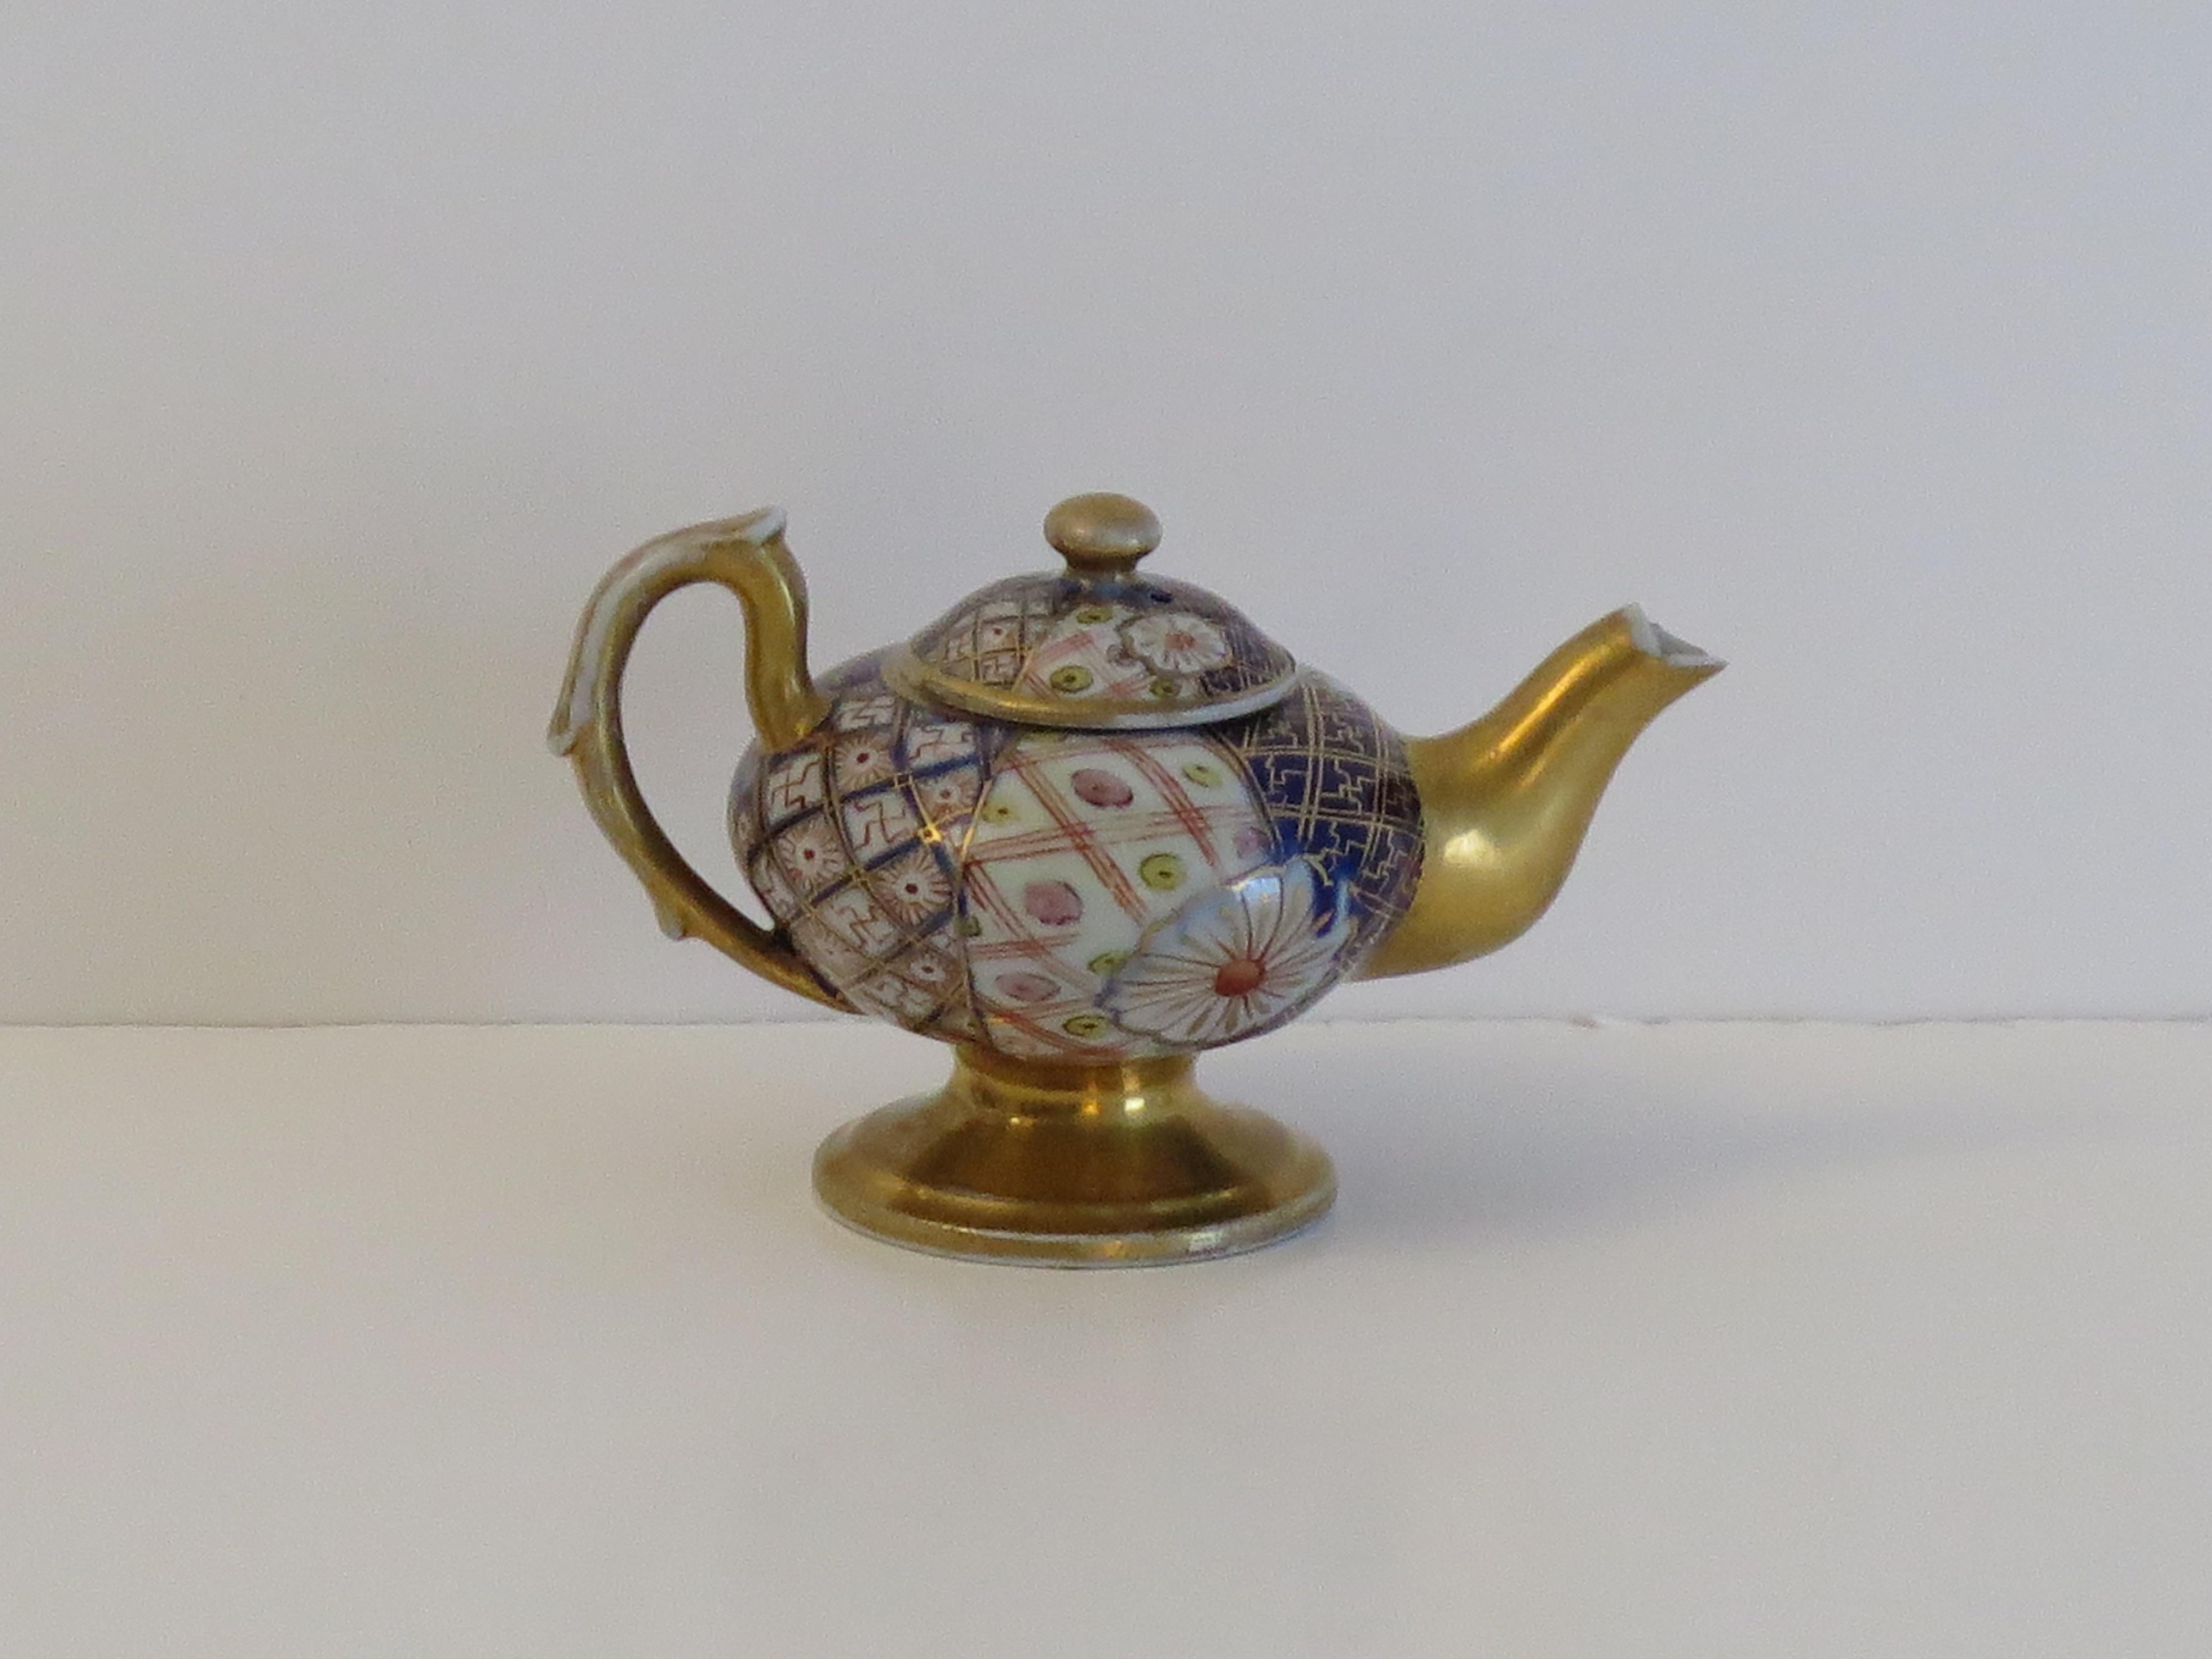 Rare Mason's Ironstone Miniature Teapot in Plaid Japan rare Pattern, circa 1820 For Sale 2